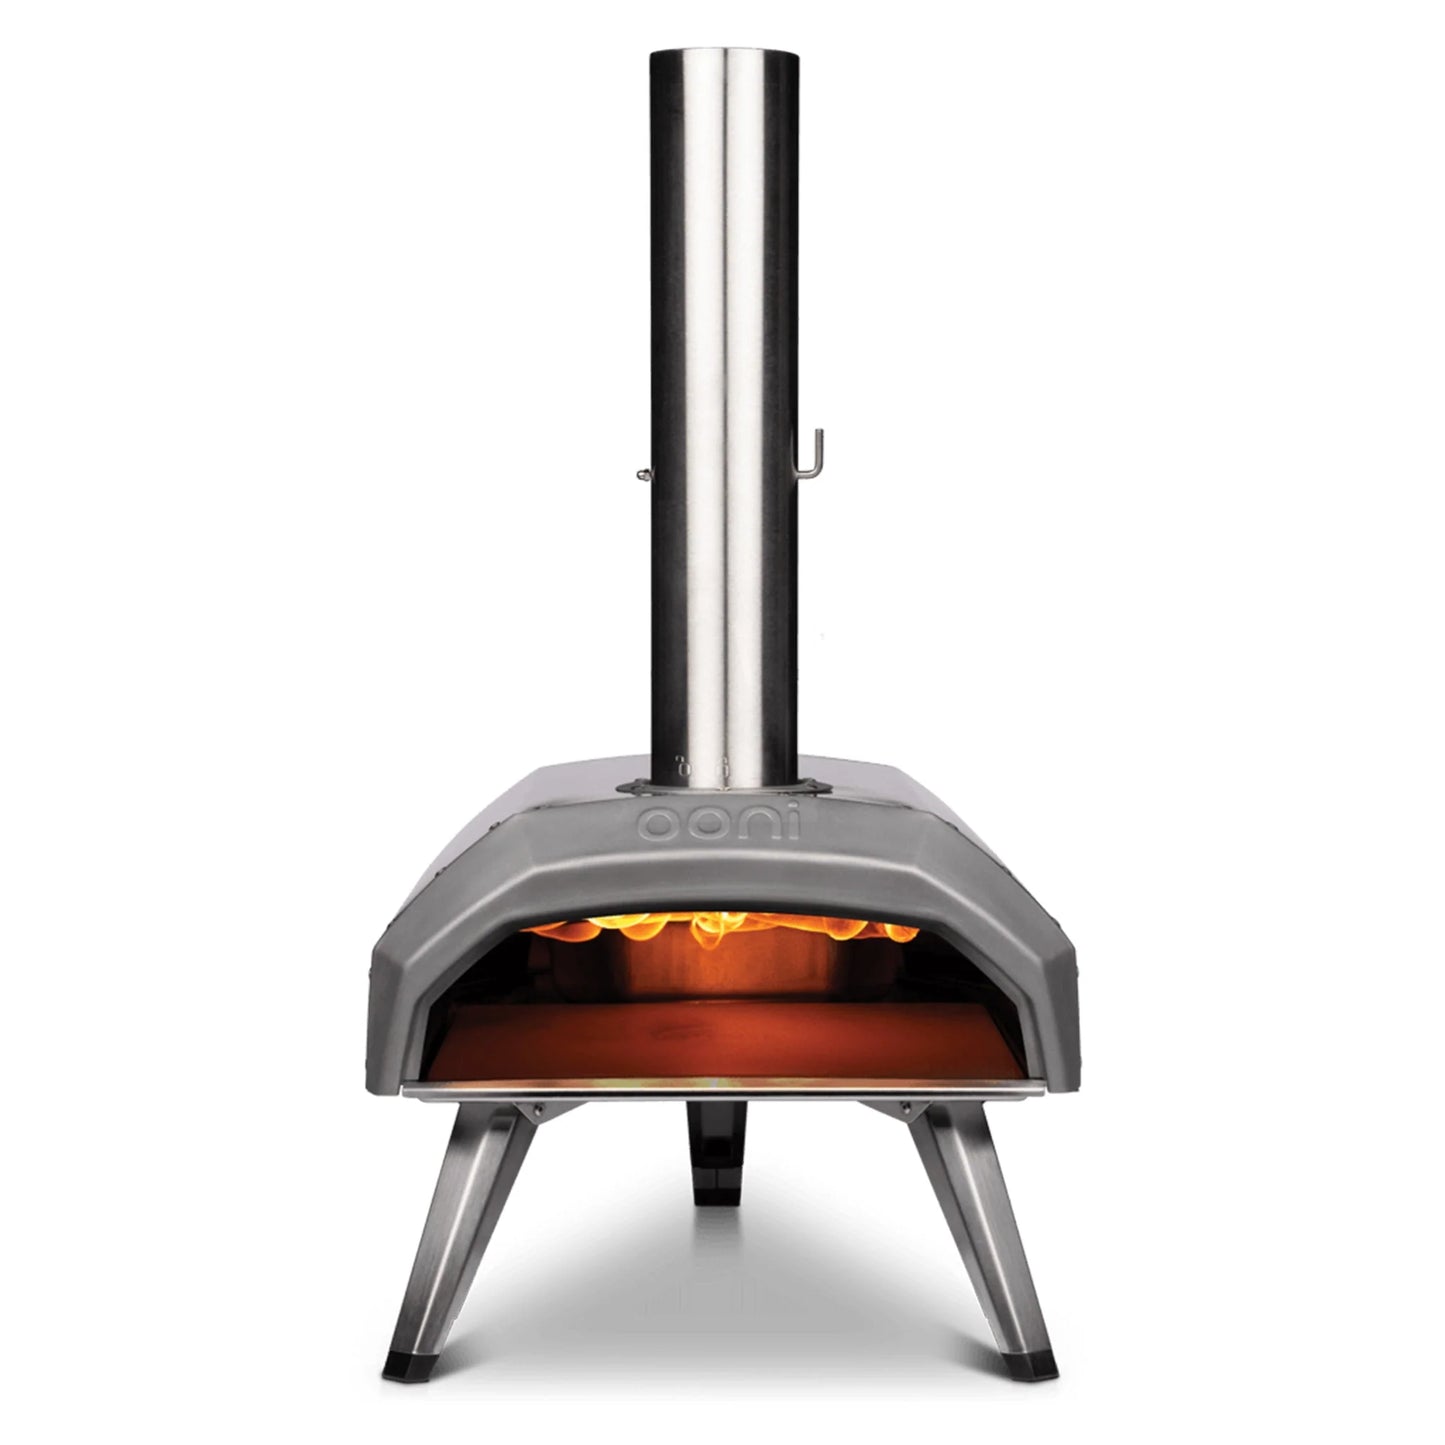 Ooni Karu 12 Wood / Charcoal Pizza Oven